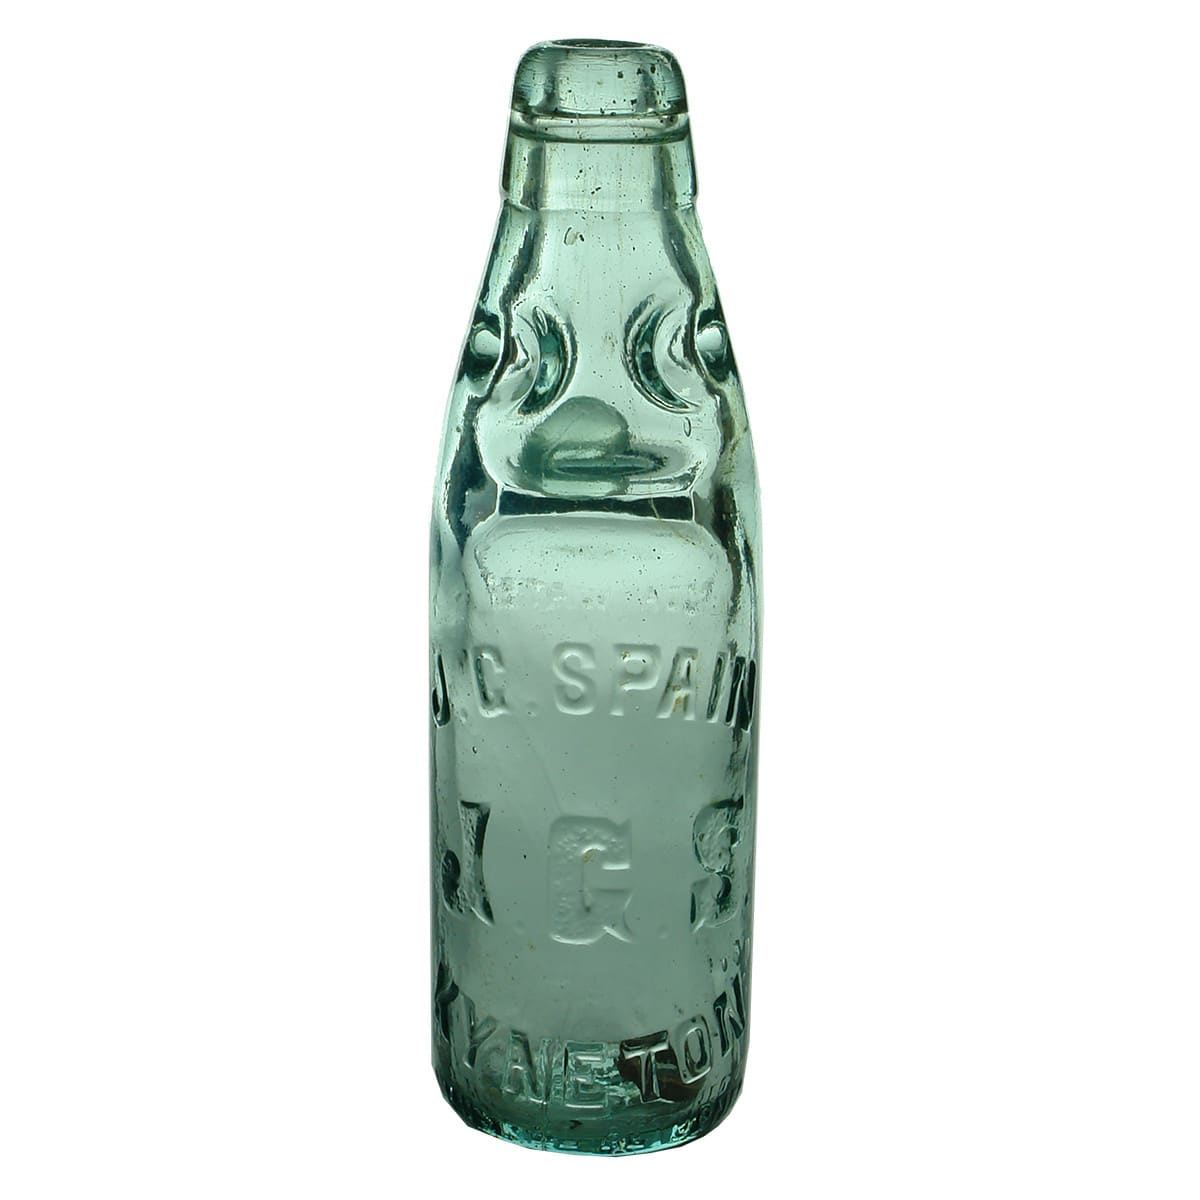 Codd. J. G. Spain, Kyneton. Soda Water. Dobson. 6 oz. (Victoria)